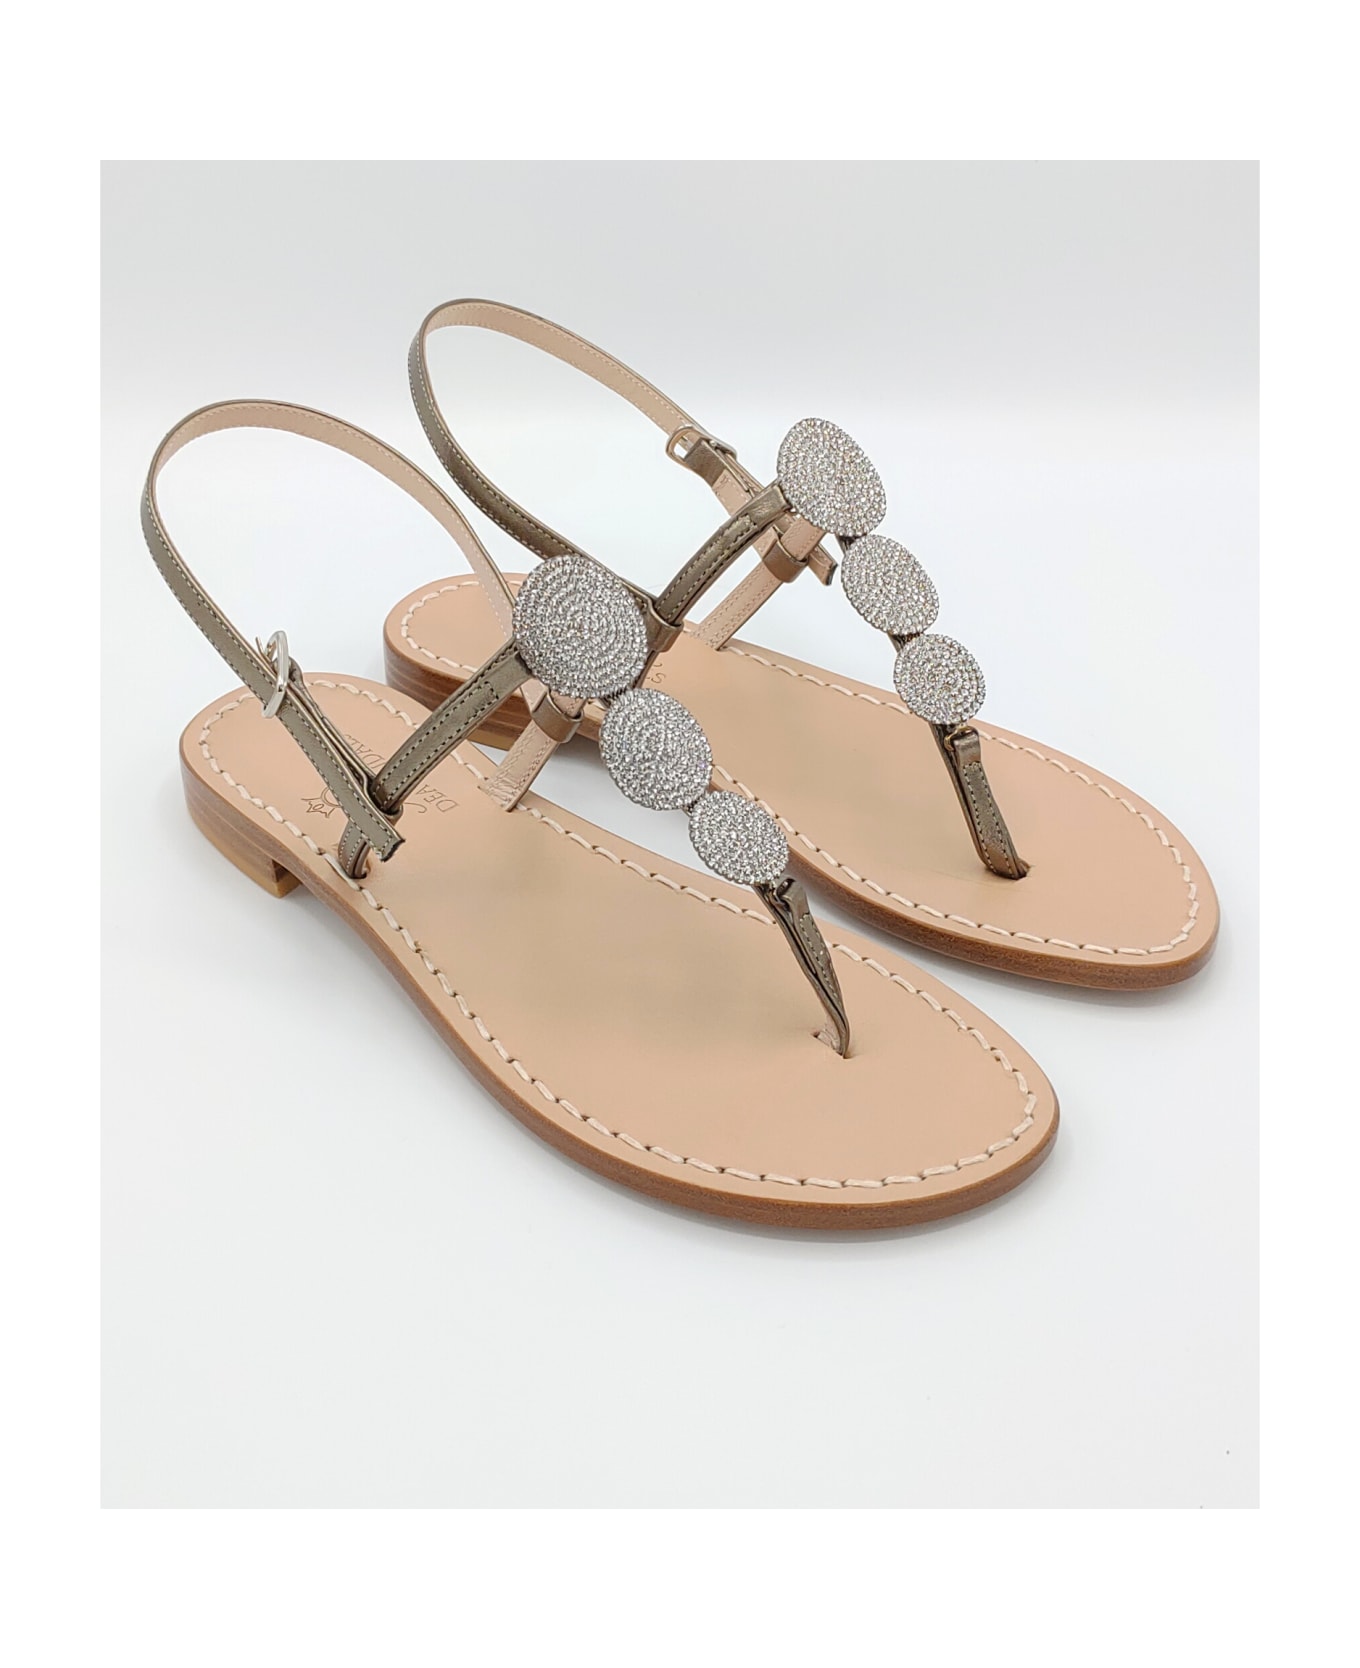 Dea Sandals Fari Di Capri Jewel Flip Flops Sandals - gunmetal, natural crystal